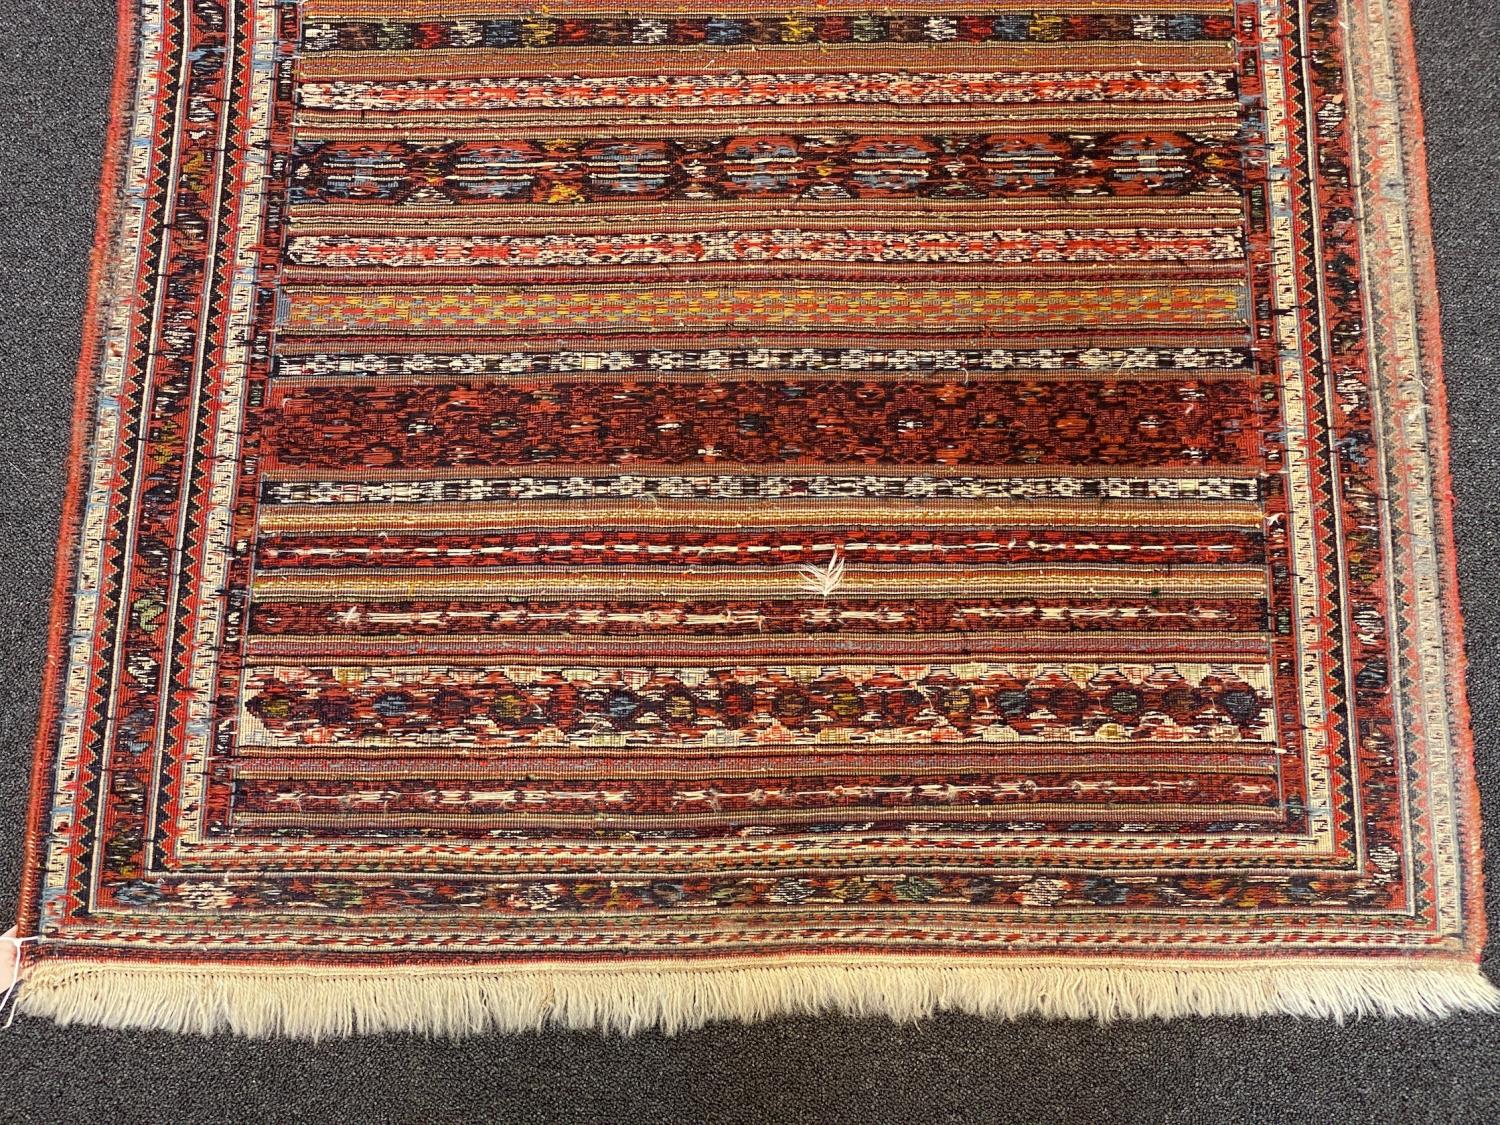 A fine Sumac flatweave polychrome rug 160 x 100 cms - Image 6 of 7